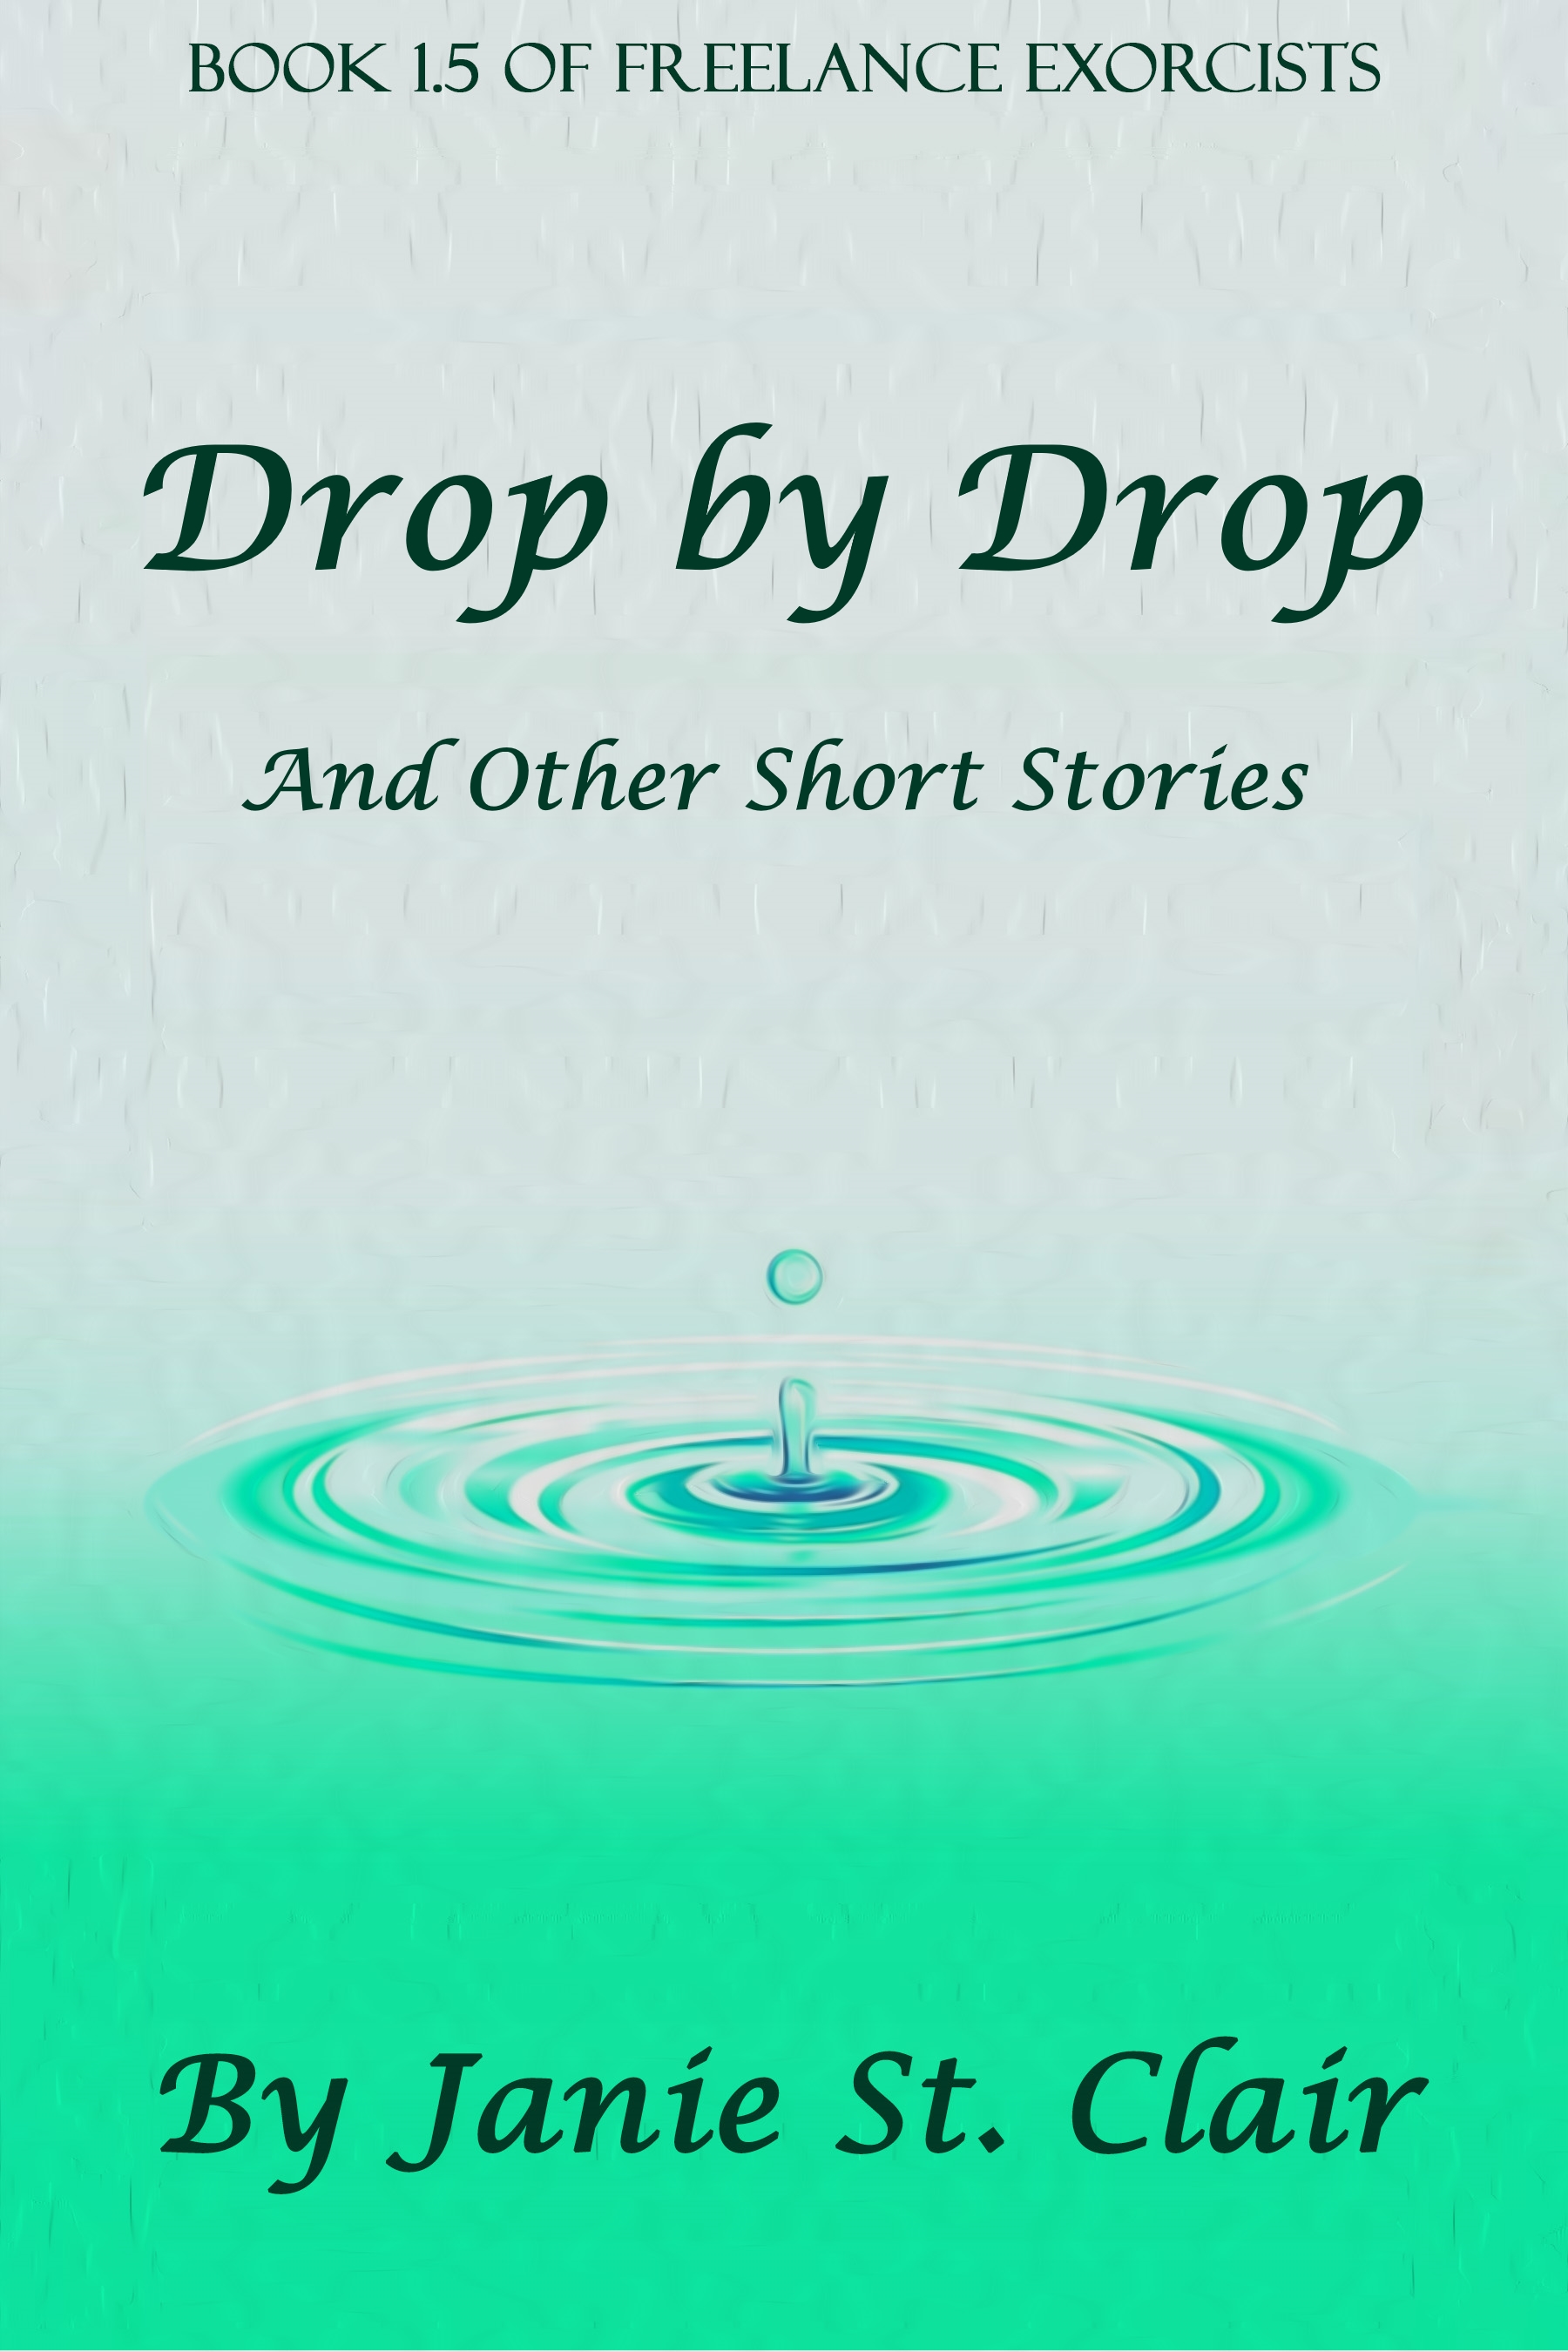 FREE: Drop By Drop by Janie St. Clair